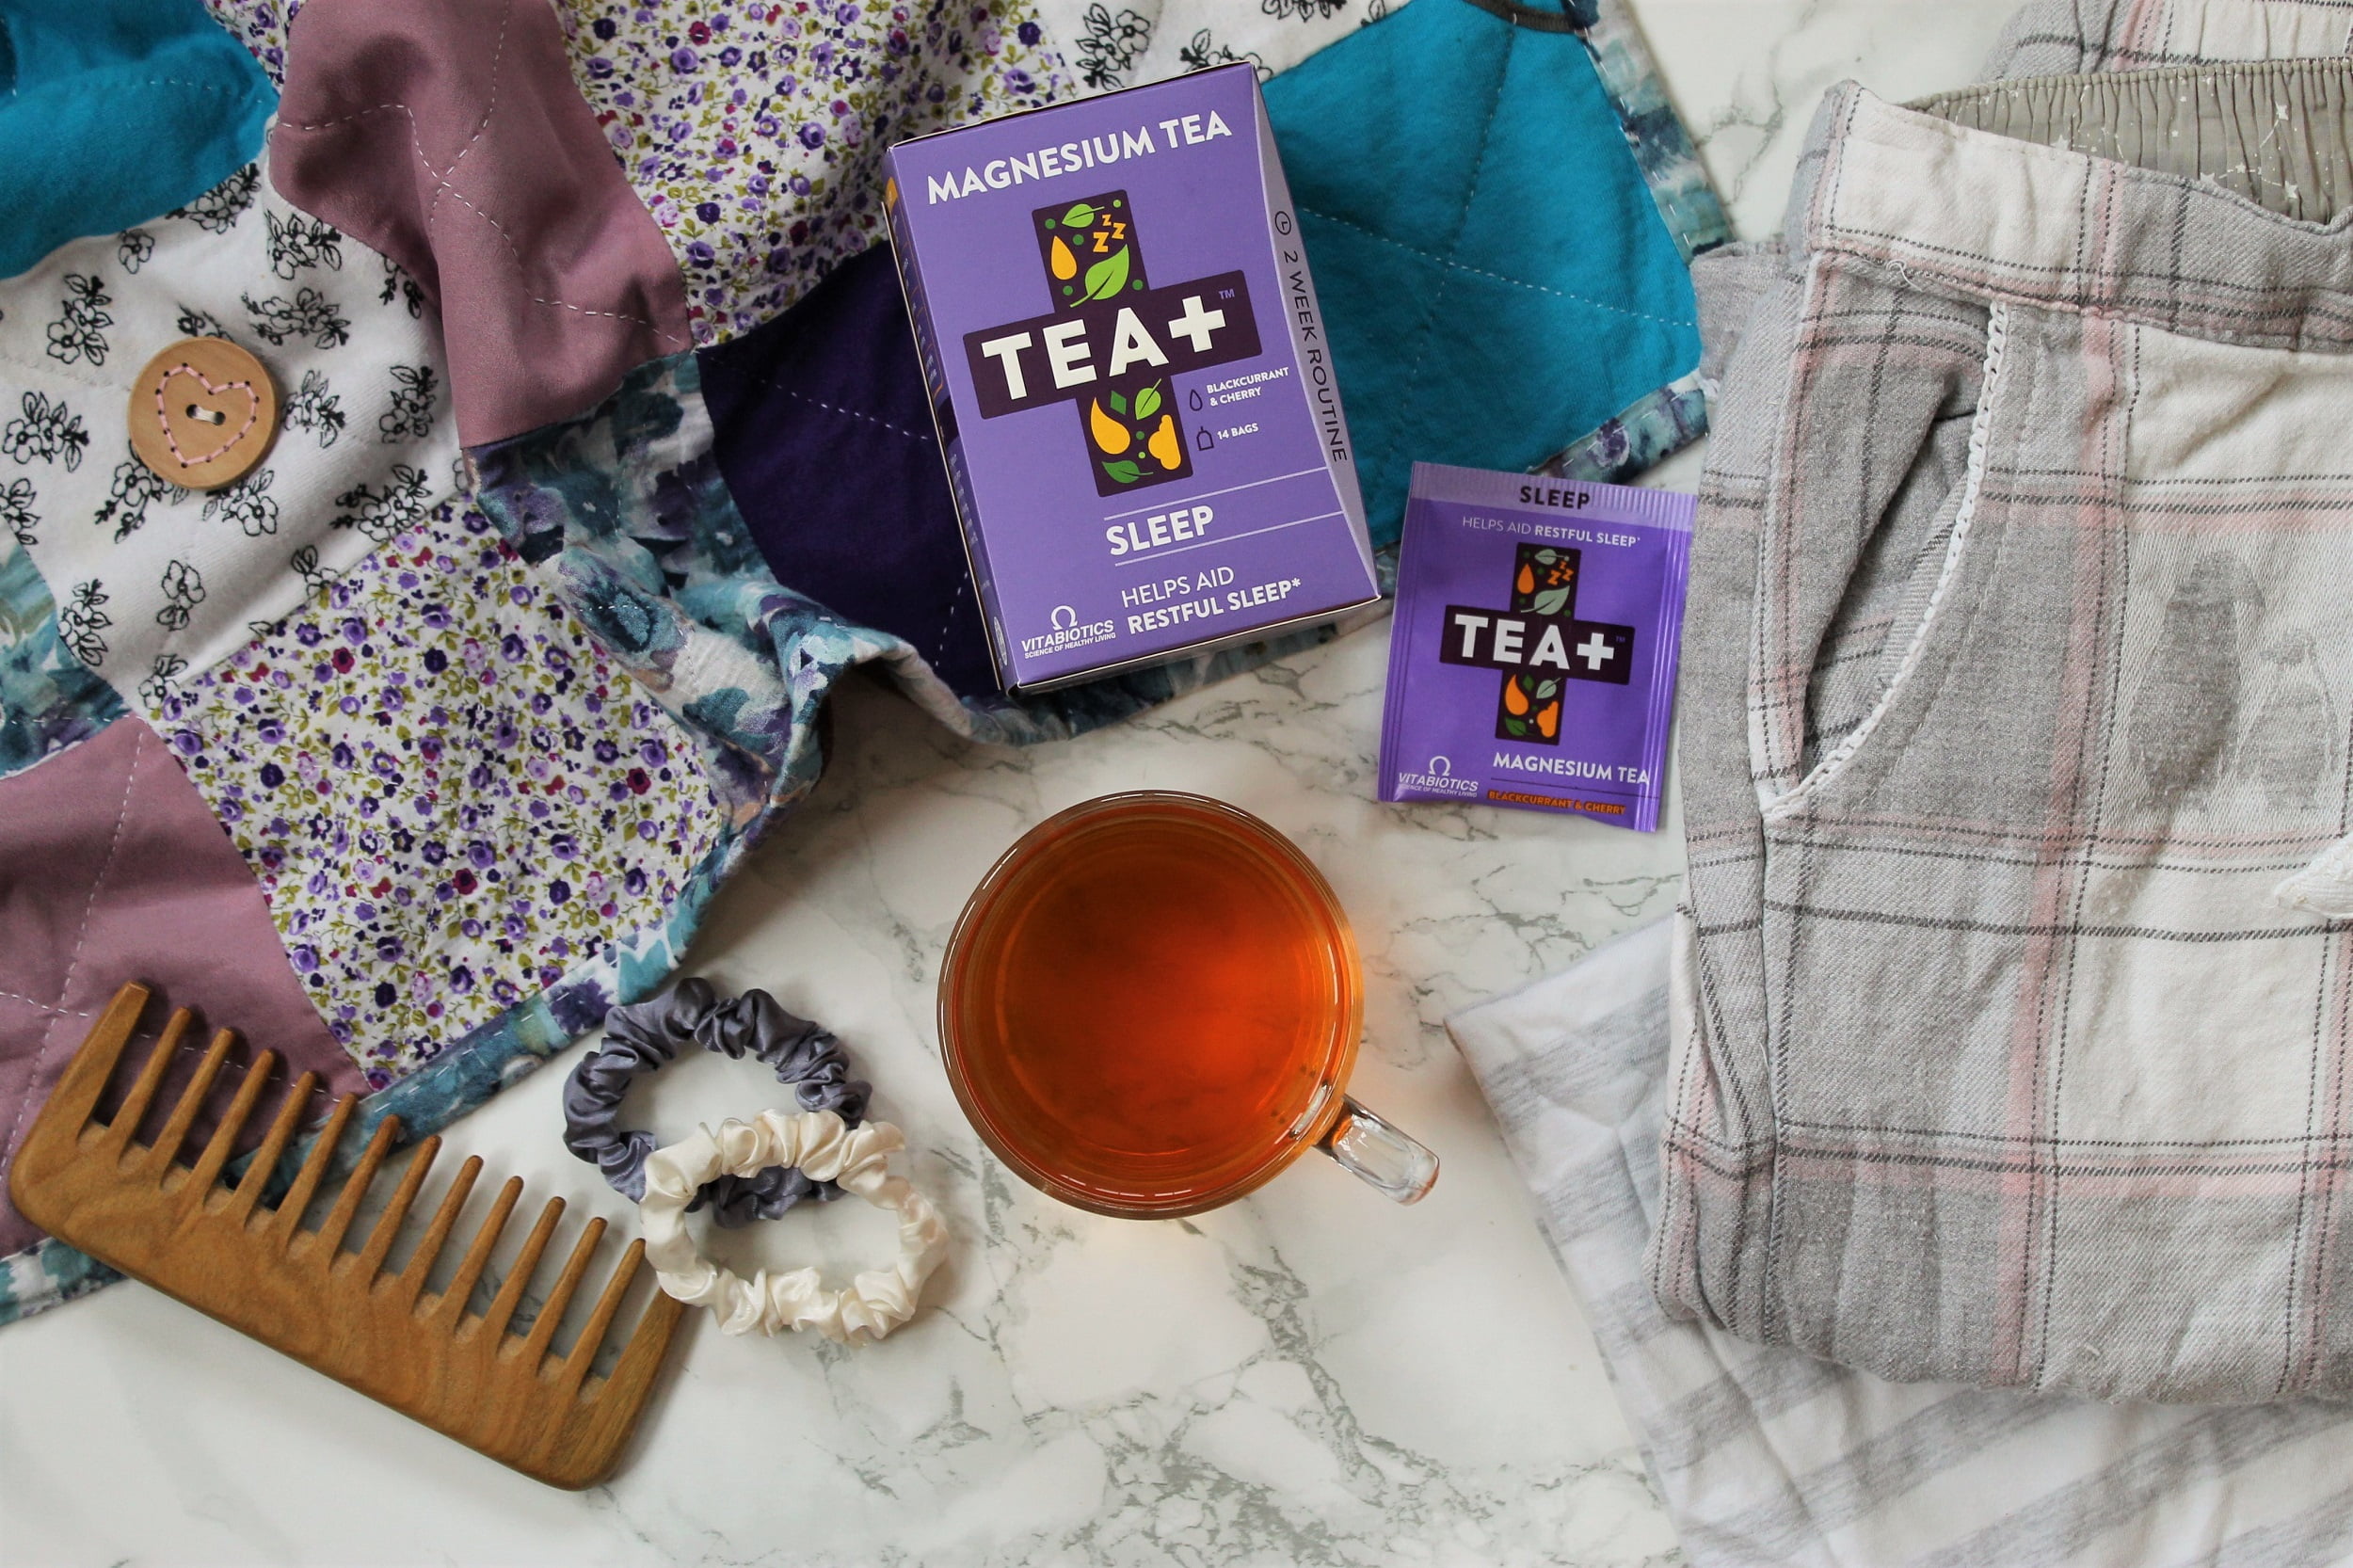 Tea+ Sleep Magnesium Tea Review